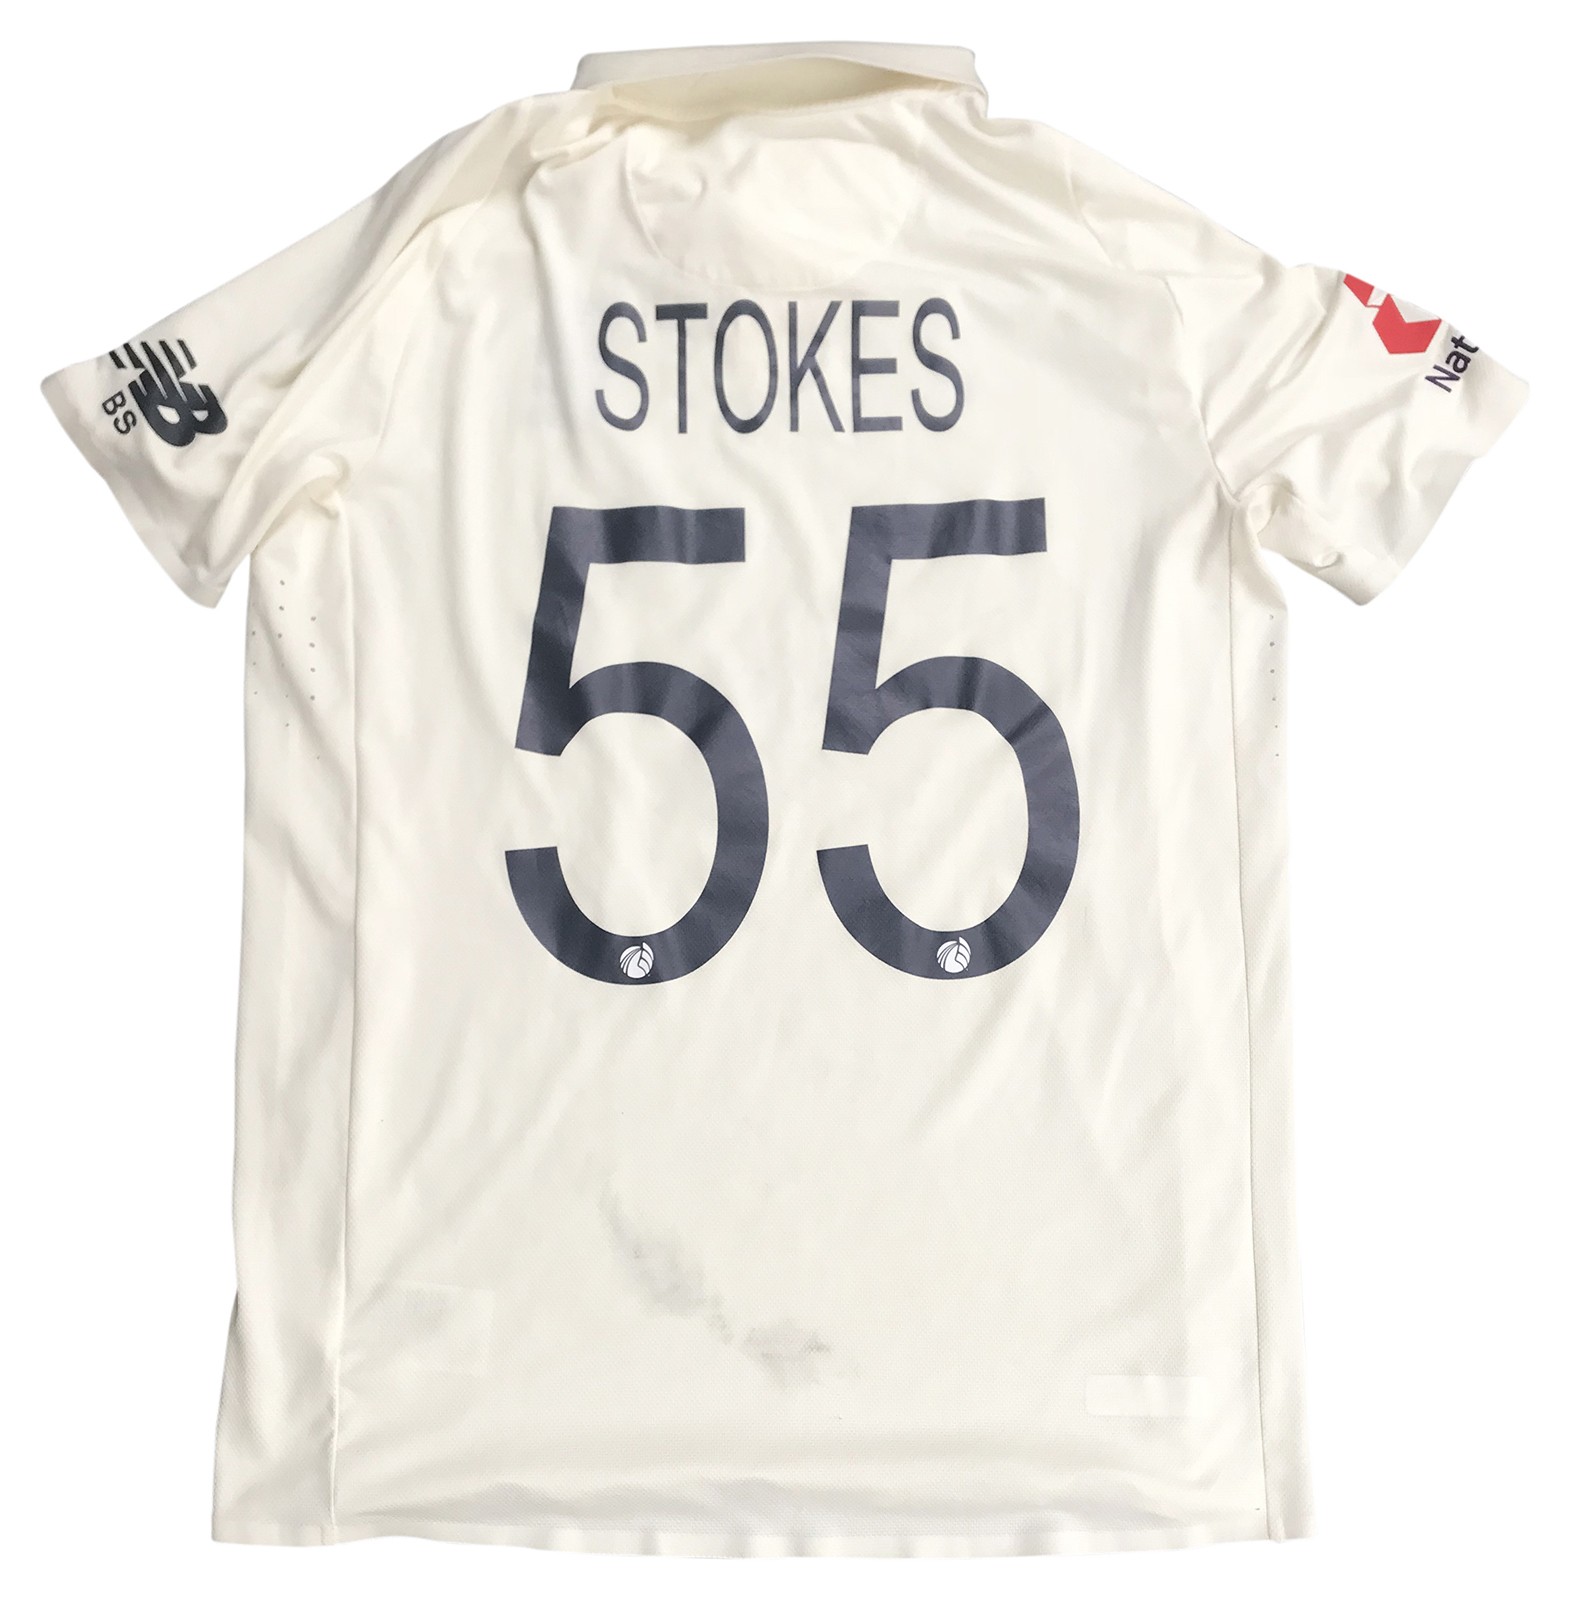 ben stokes shirt number